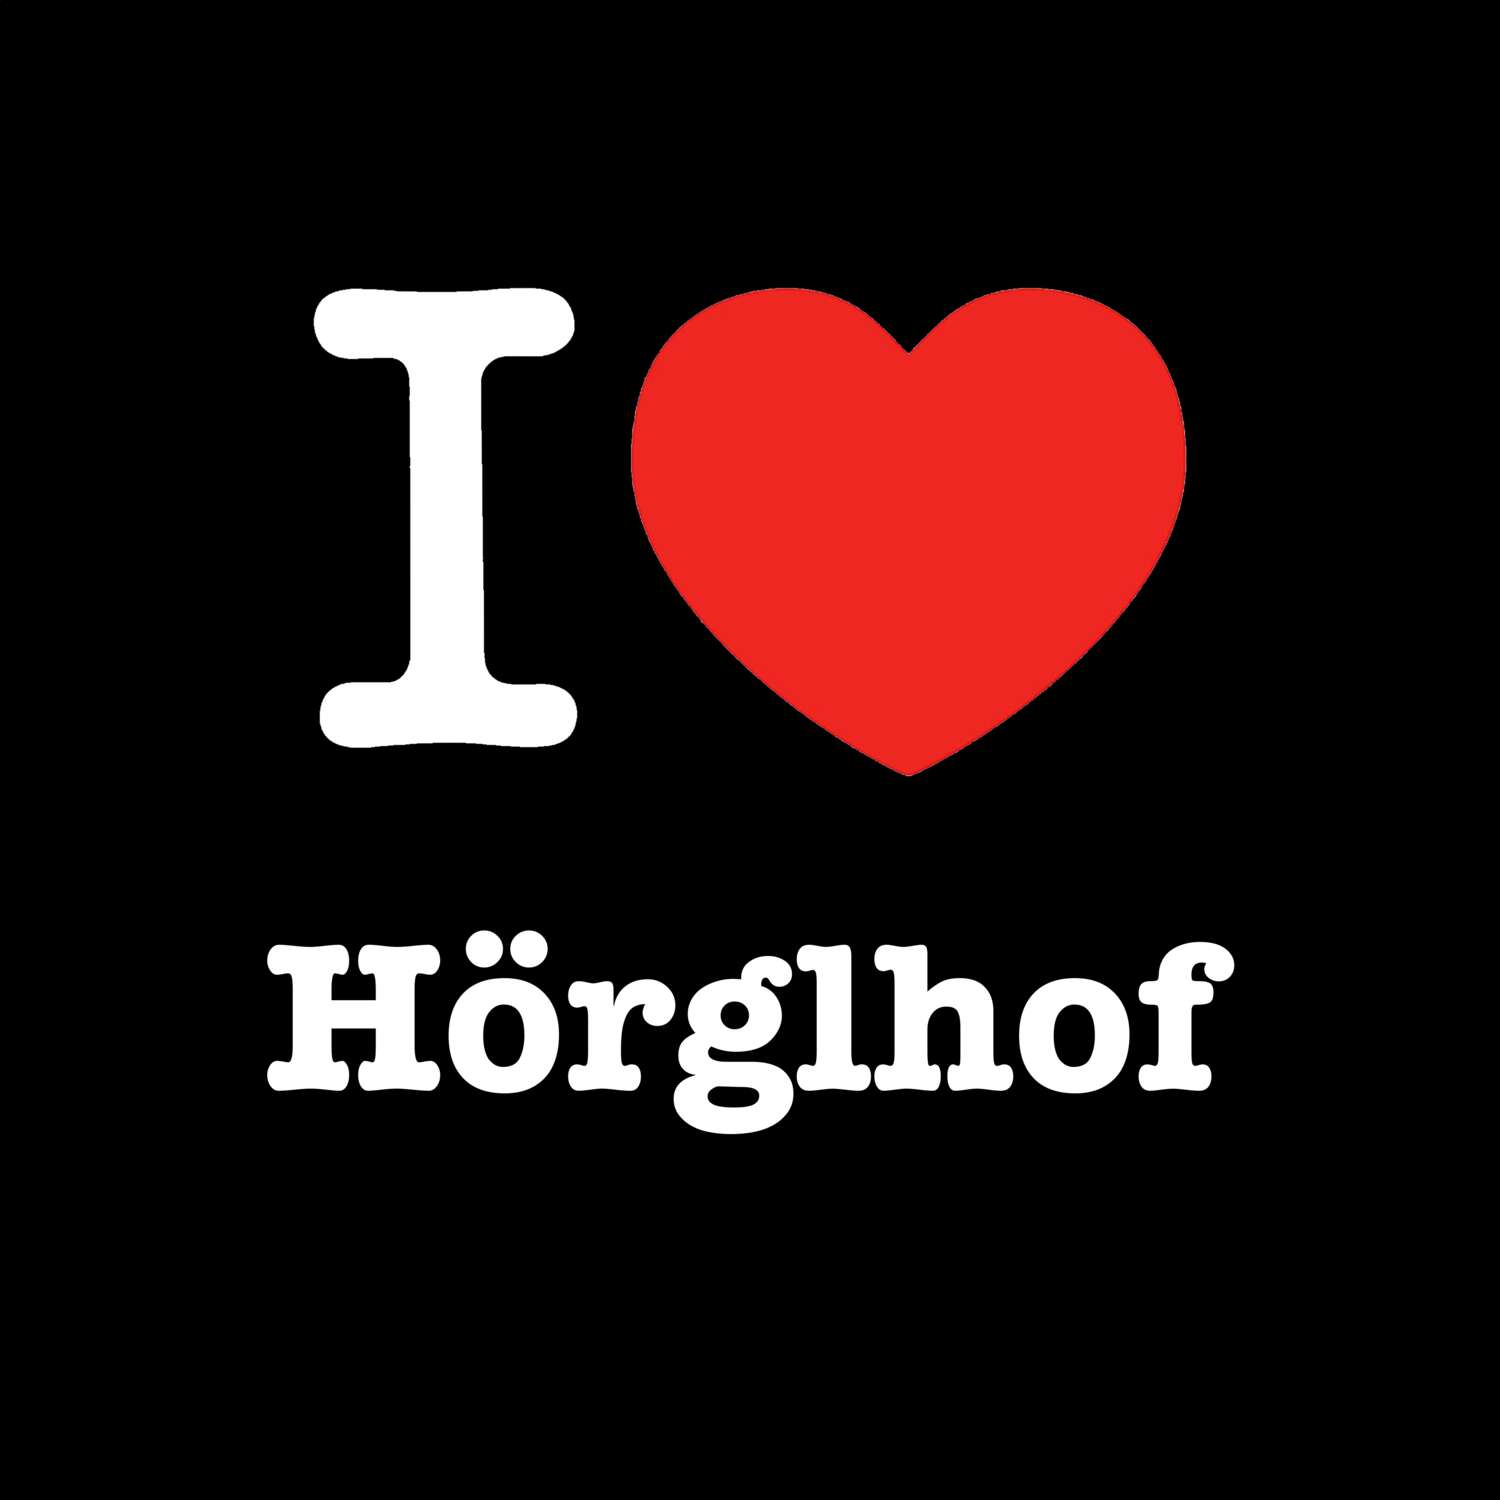 Hörglhof T-Shirt »I love«